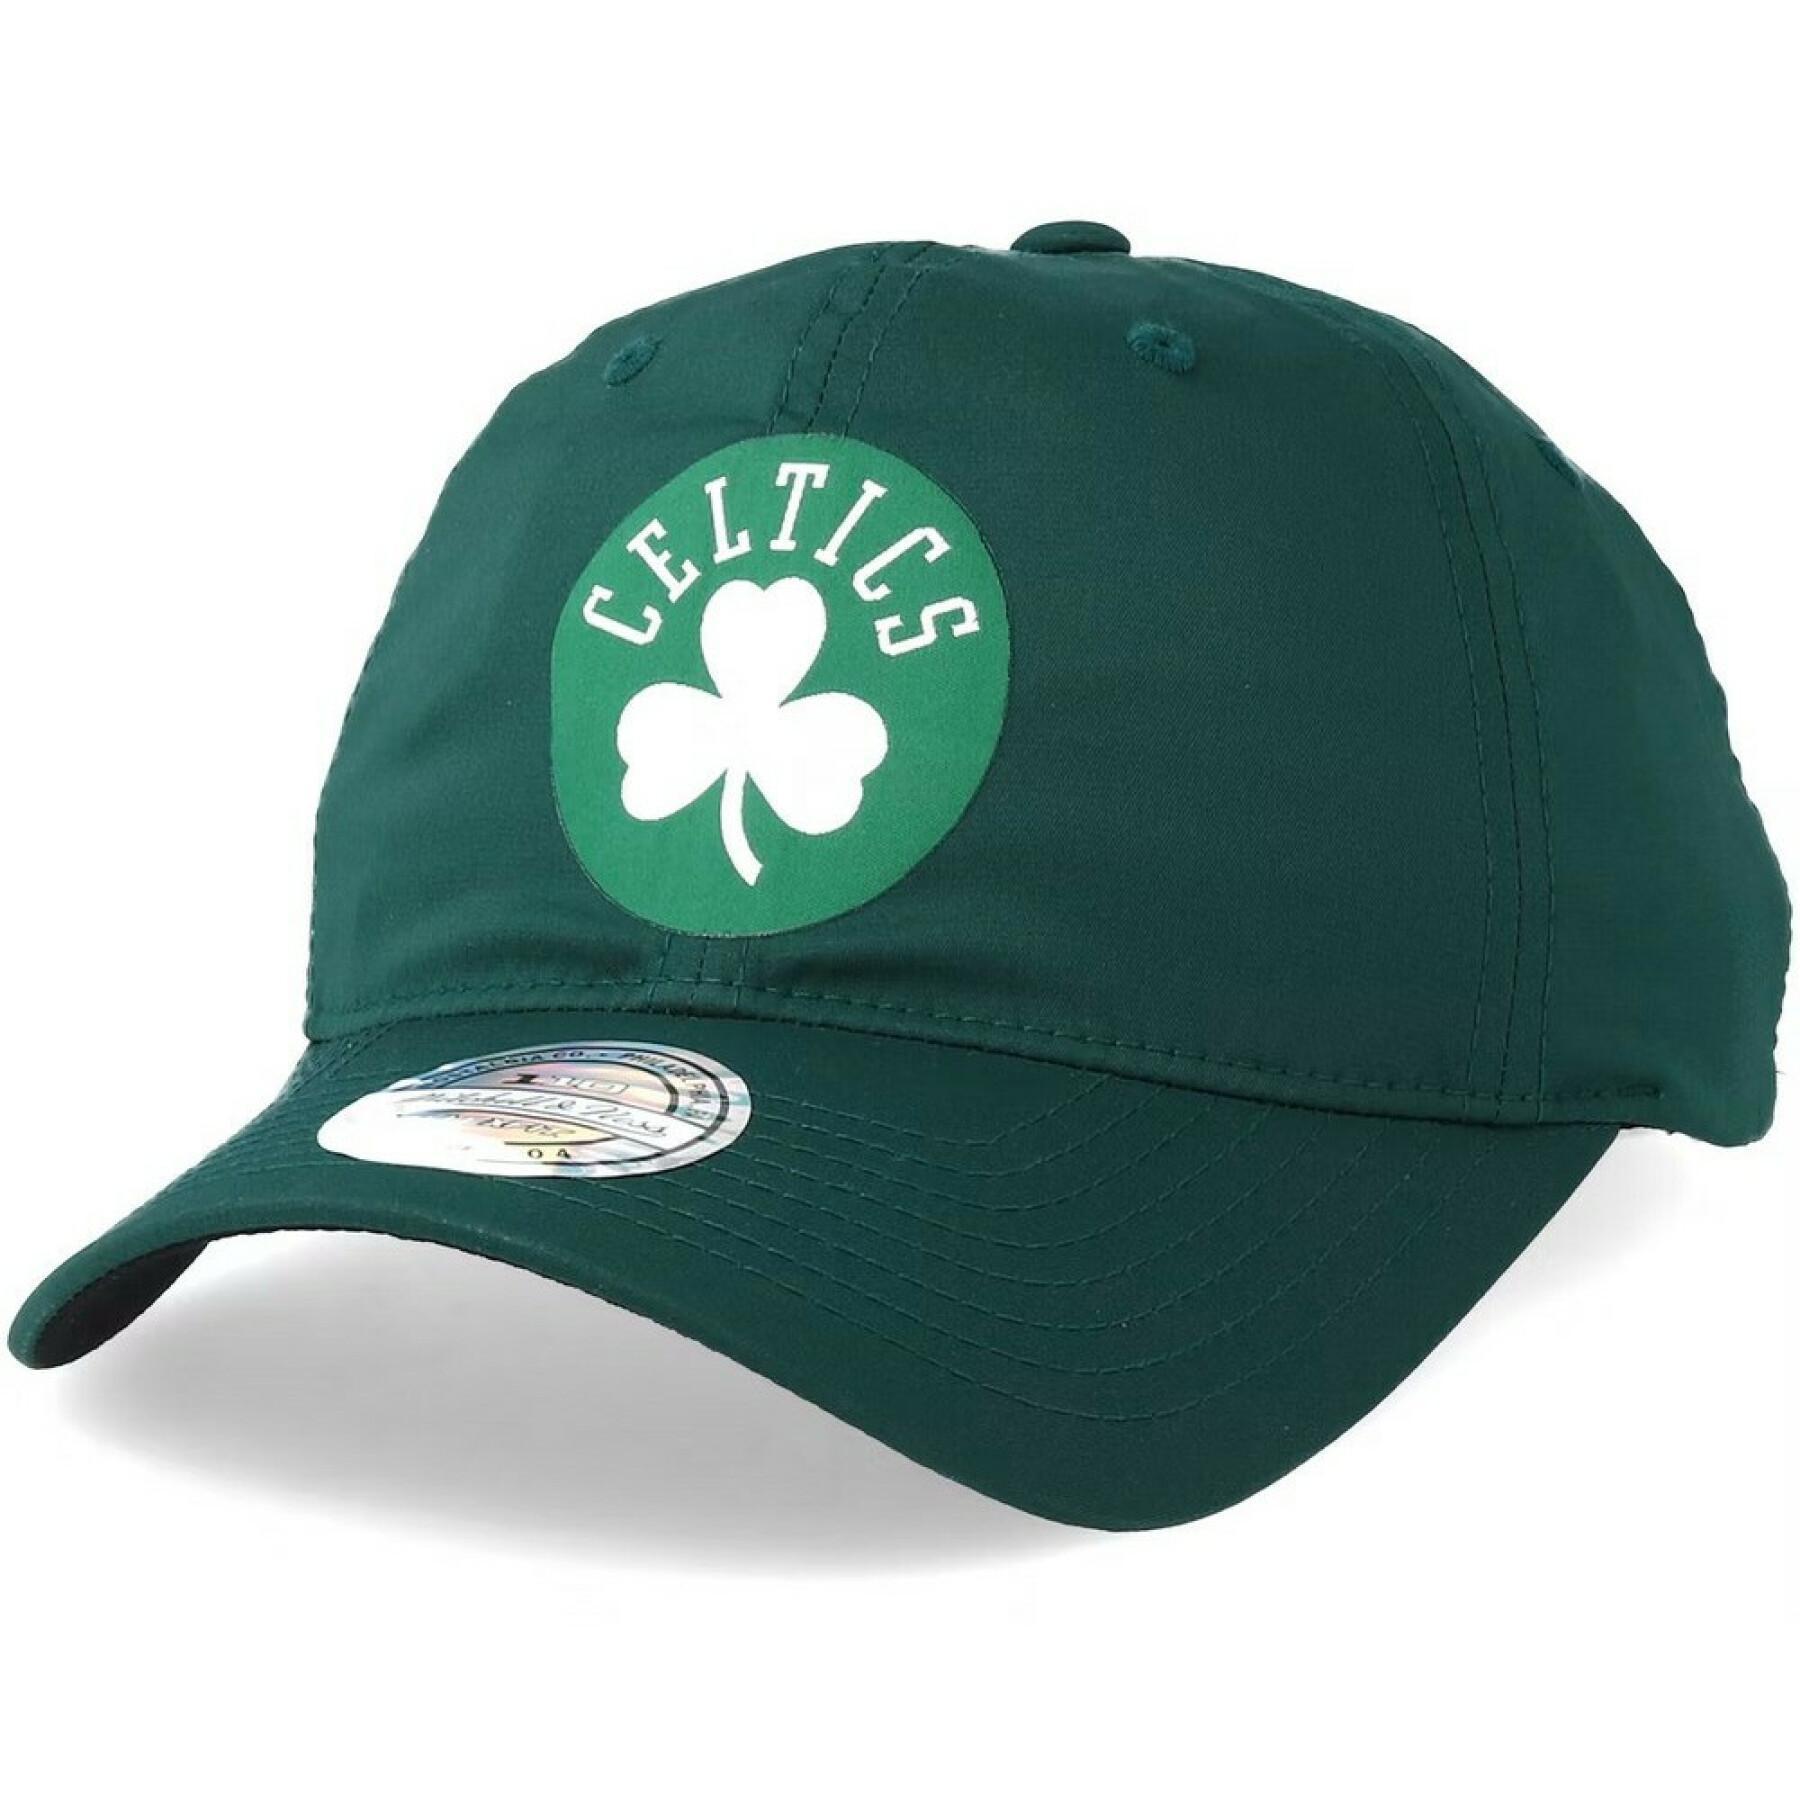 Kapsyl Boston Celtics light & dry